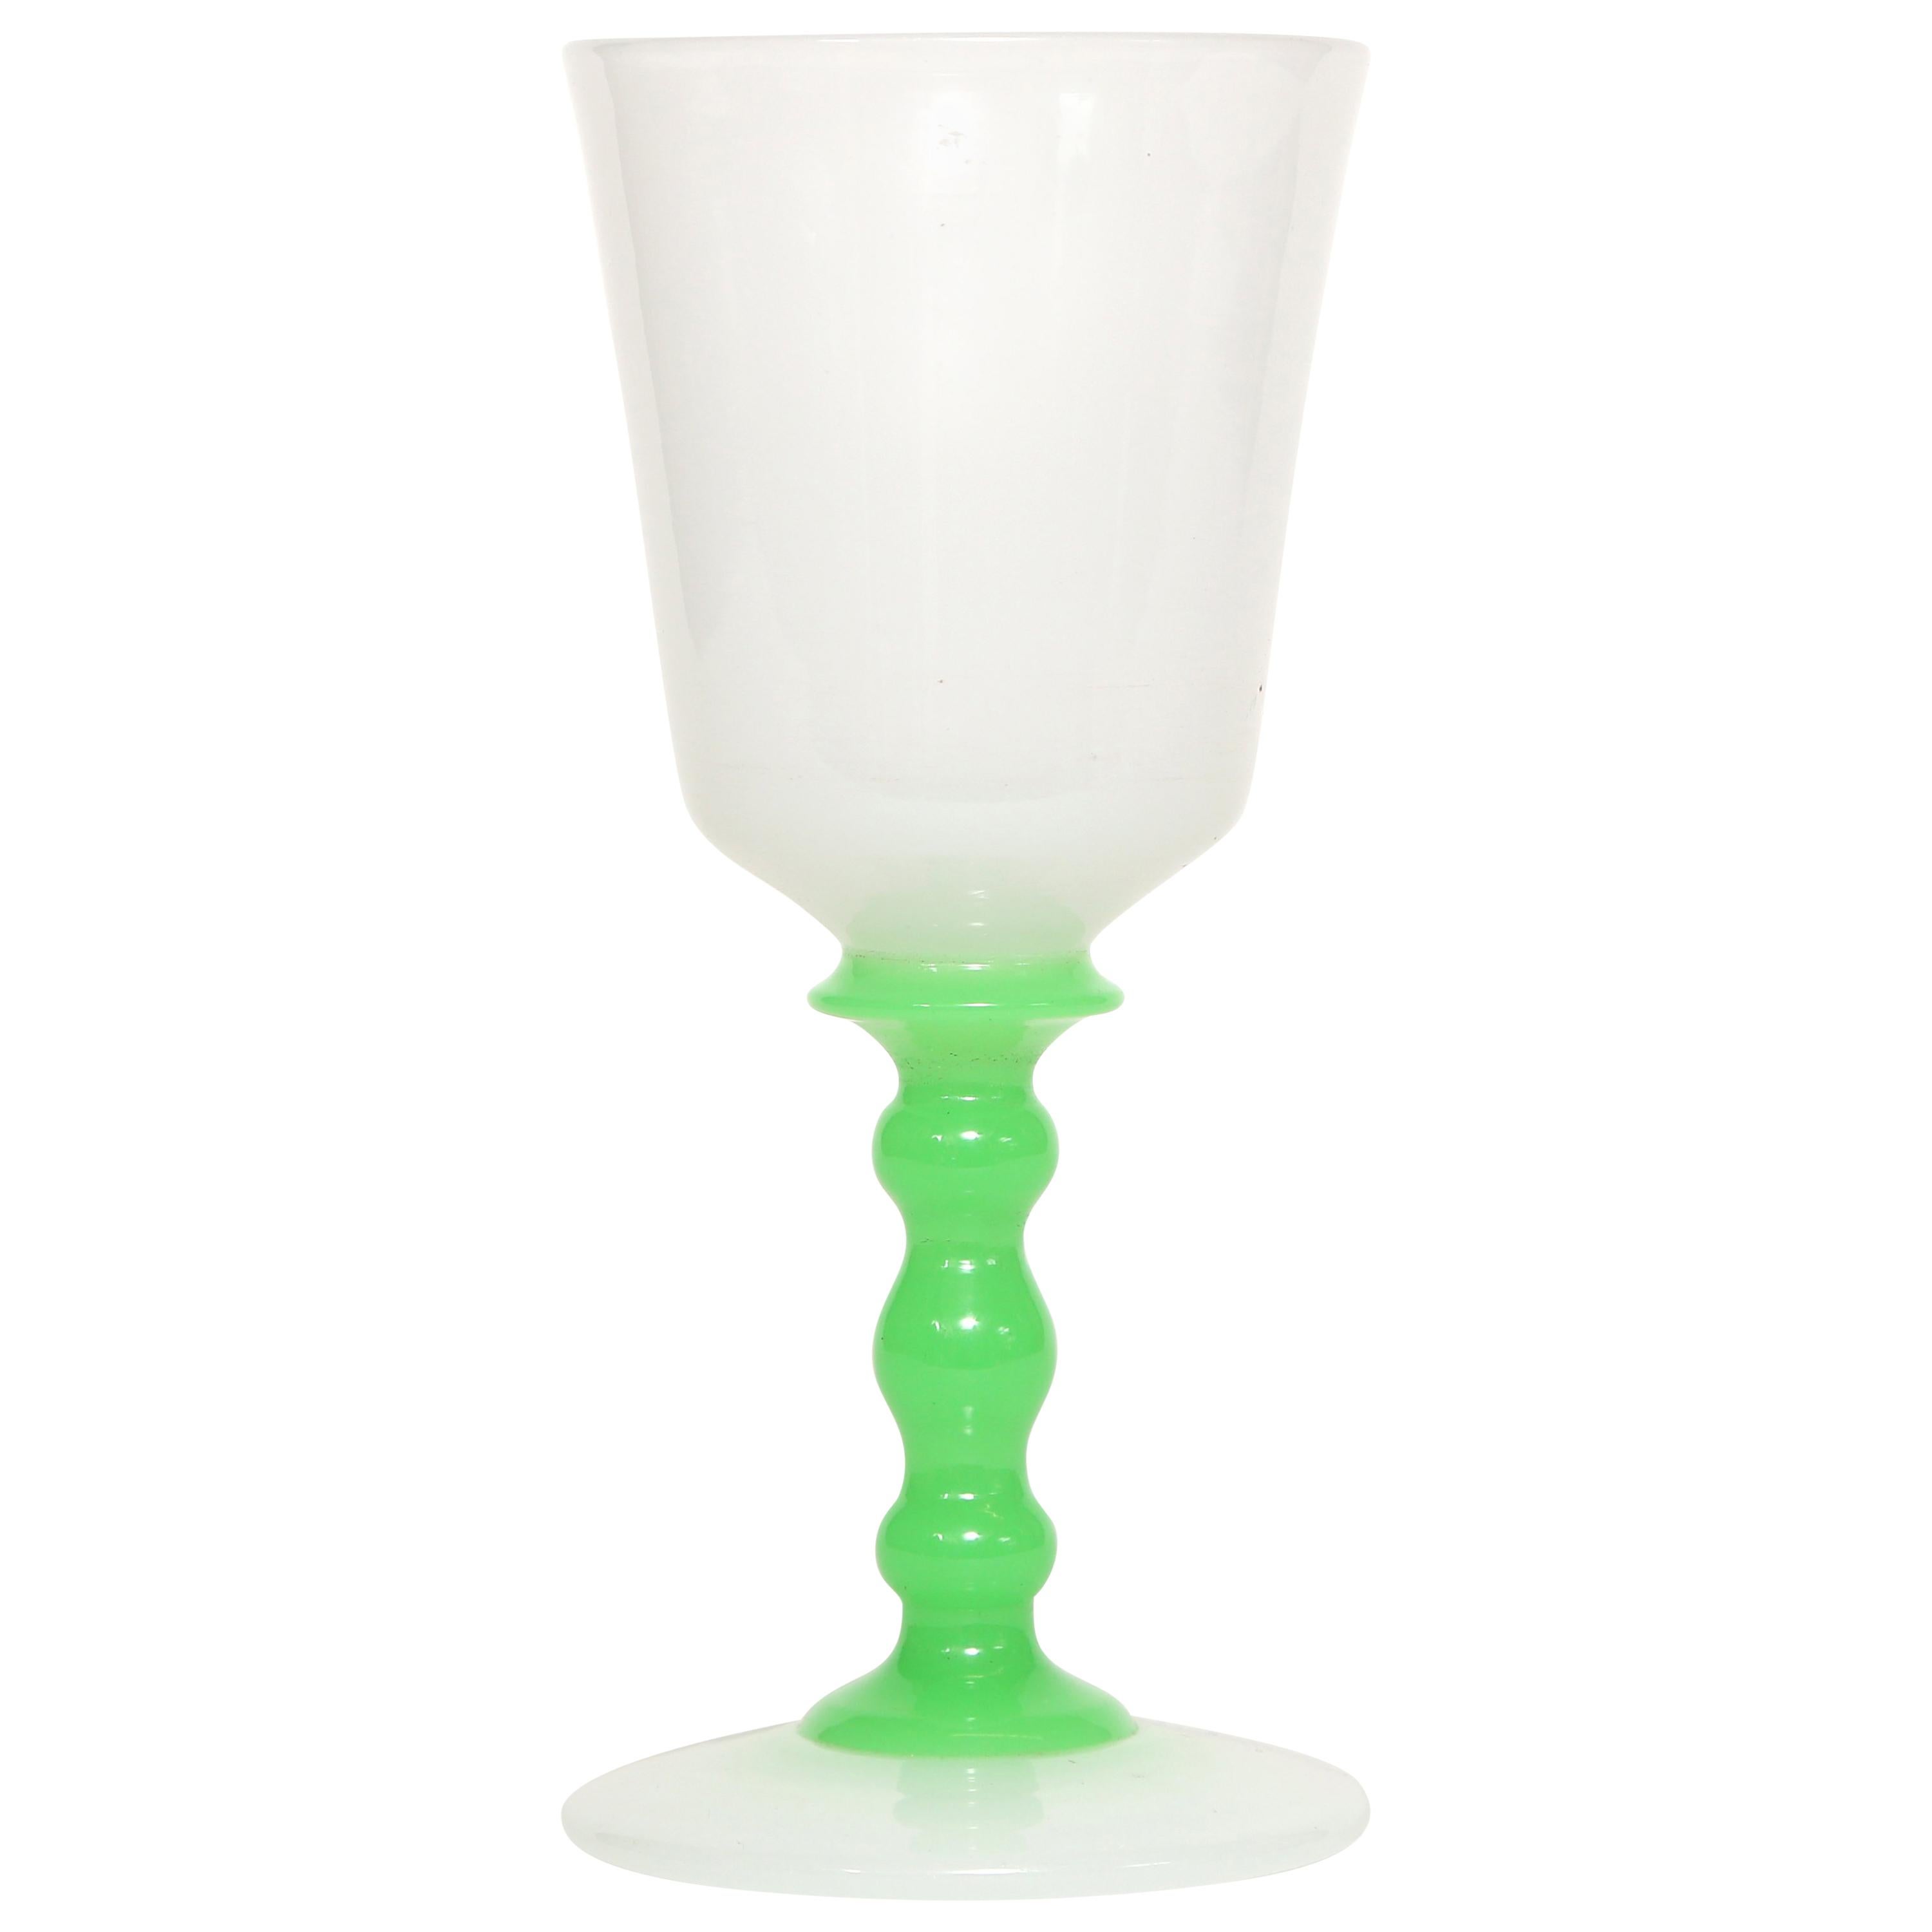 Jade Green Opaline Stemmed Glass/Goblet by Steuben/Stevens & Williams 